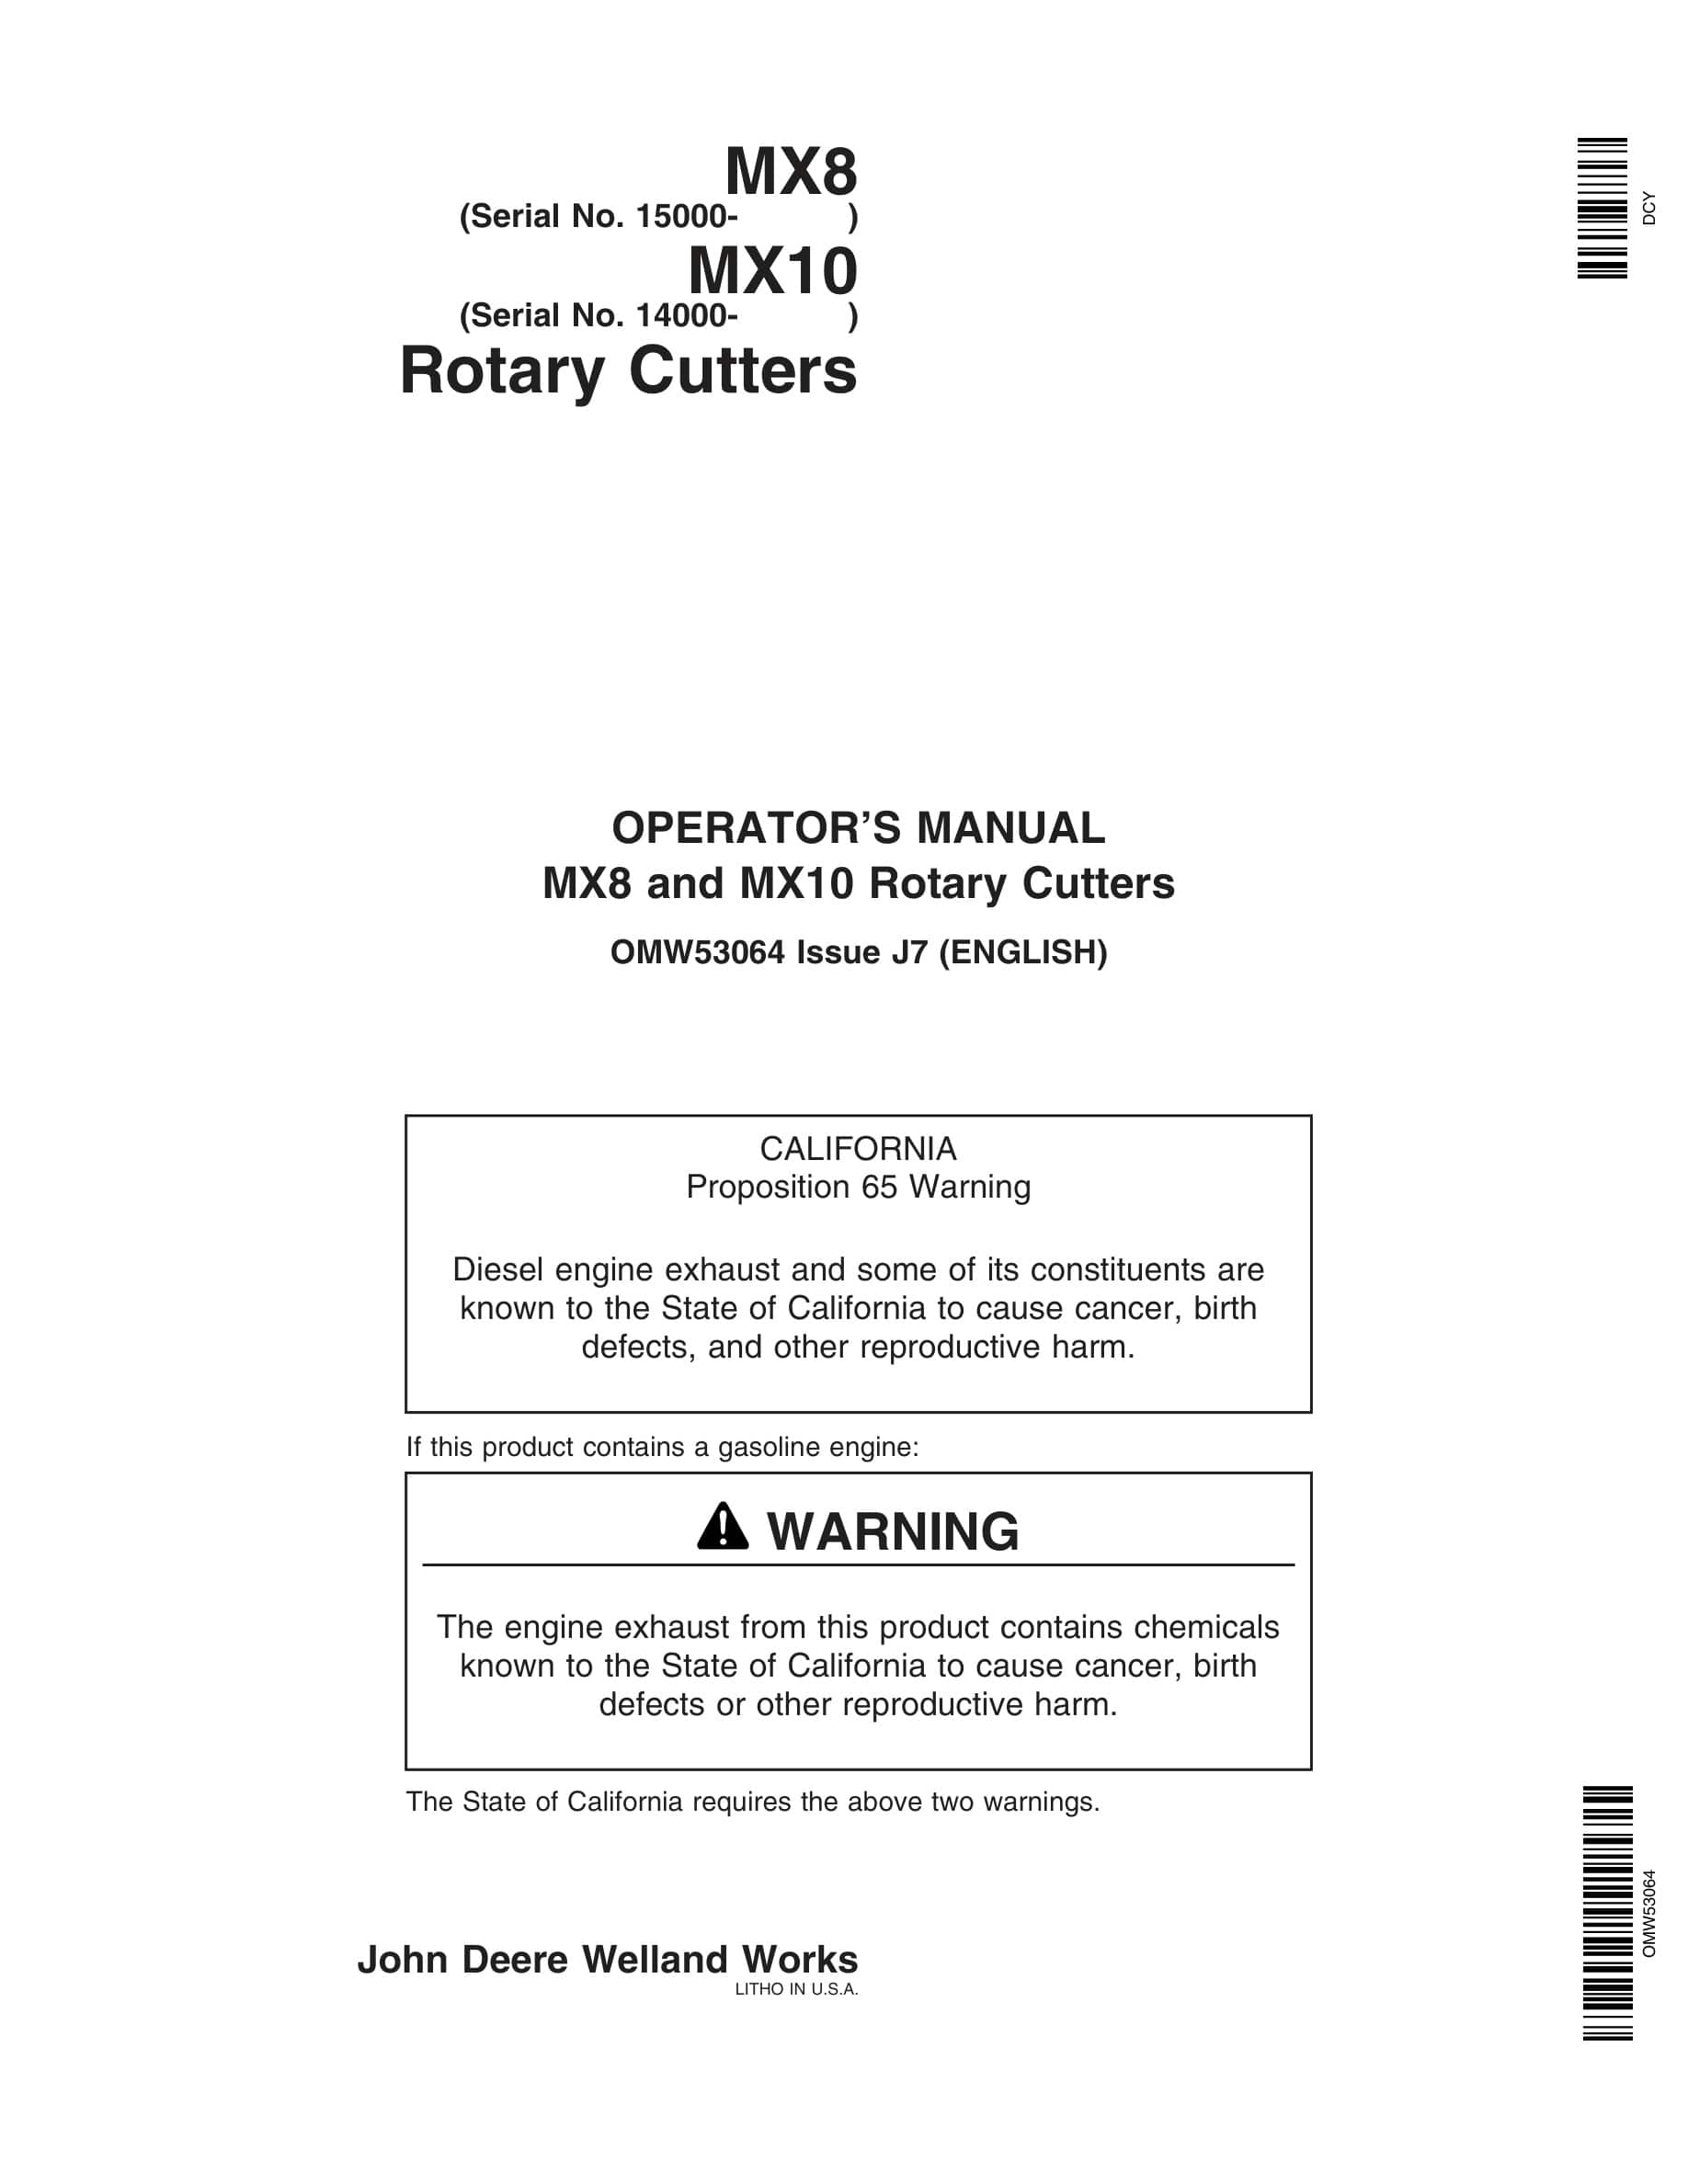 John Deere MX8 and MX10 Rotary Cutter Operator Manual OMW53064-1